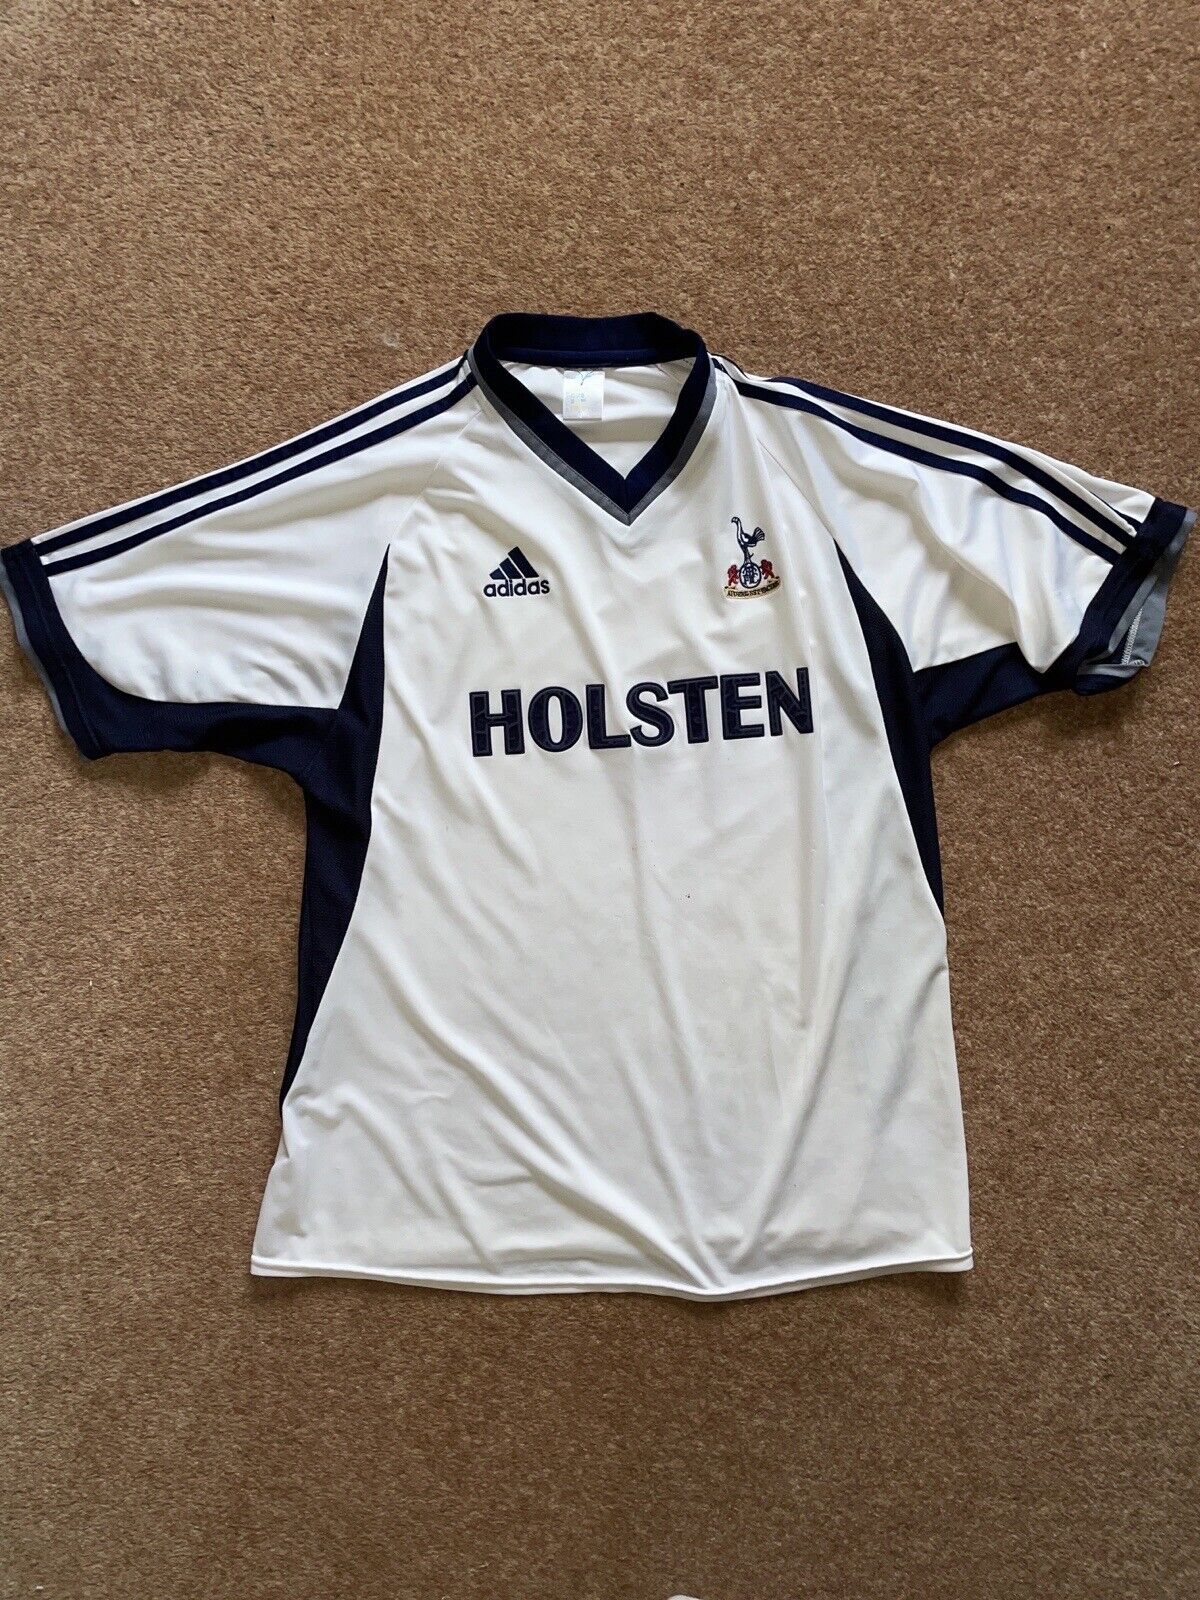 Tottenham Hotspur Shirt 2001/02 Home Adidas Vintage Spurs Top Size Extra Large